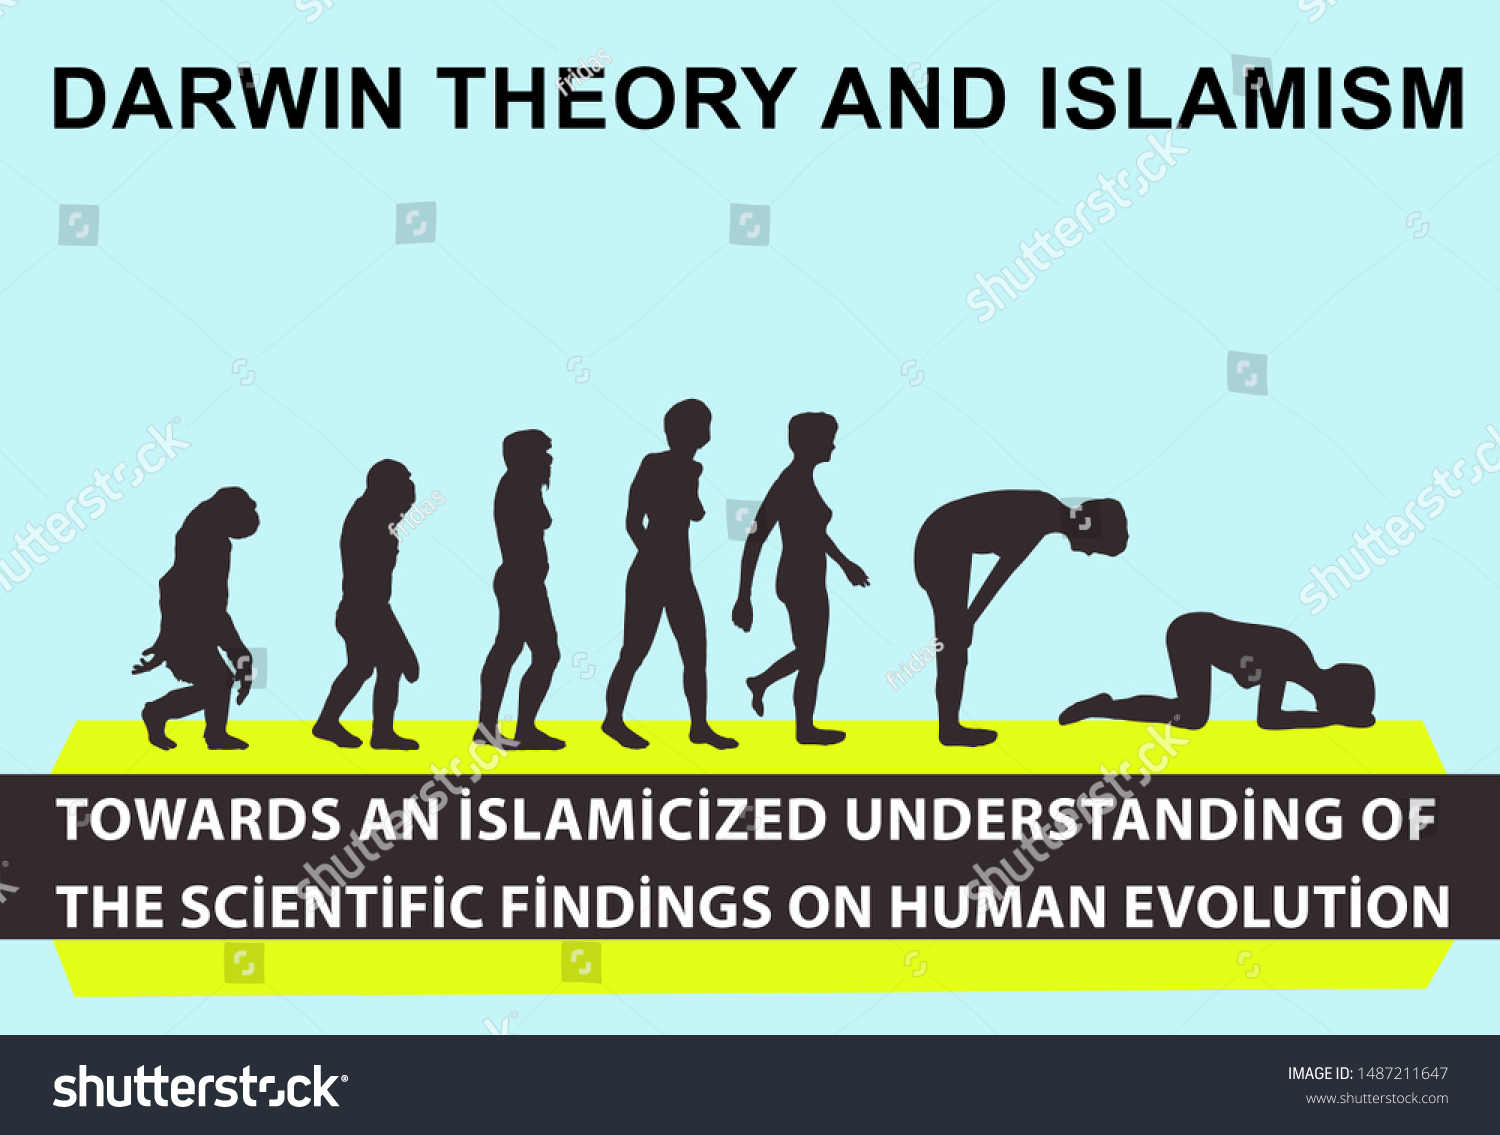 SVG of human creation. Darwin's Theory Of Evolution.Theory of evolution of man.Human development.Cro-Magnon, Neanderthal,Java Man, Australopithecine, monkey. Islam and the theory of evolution svg